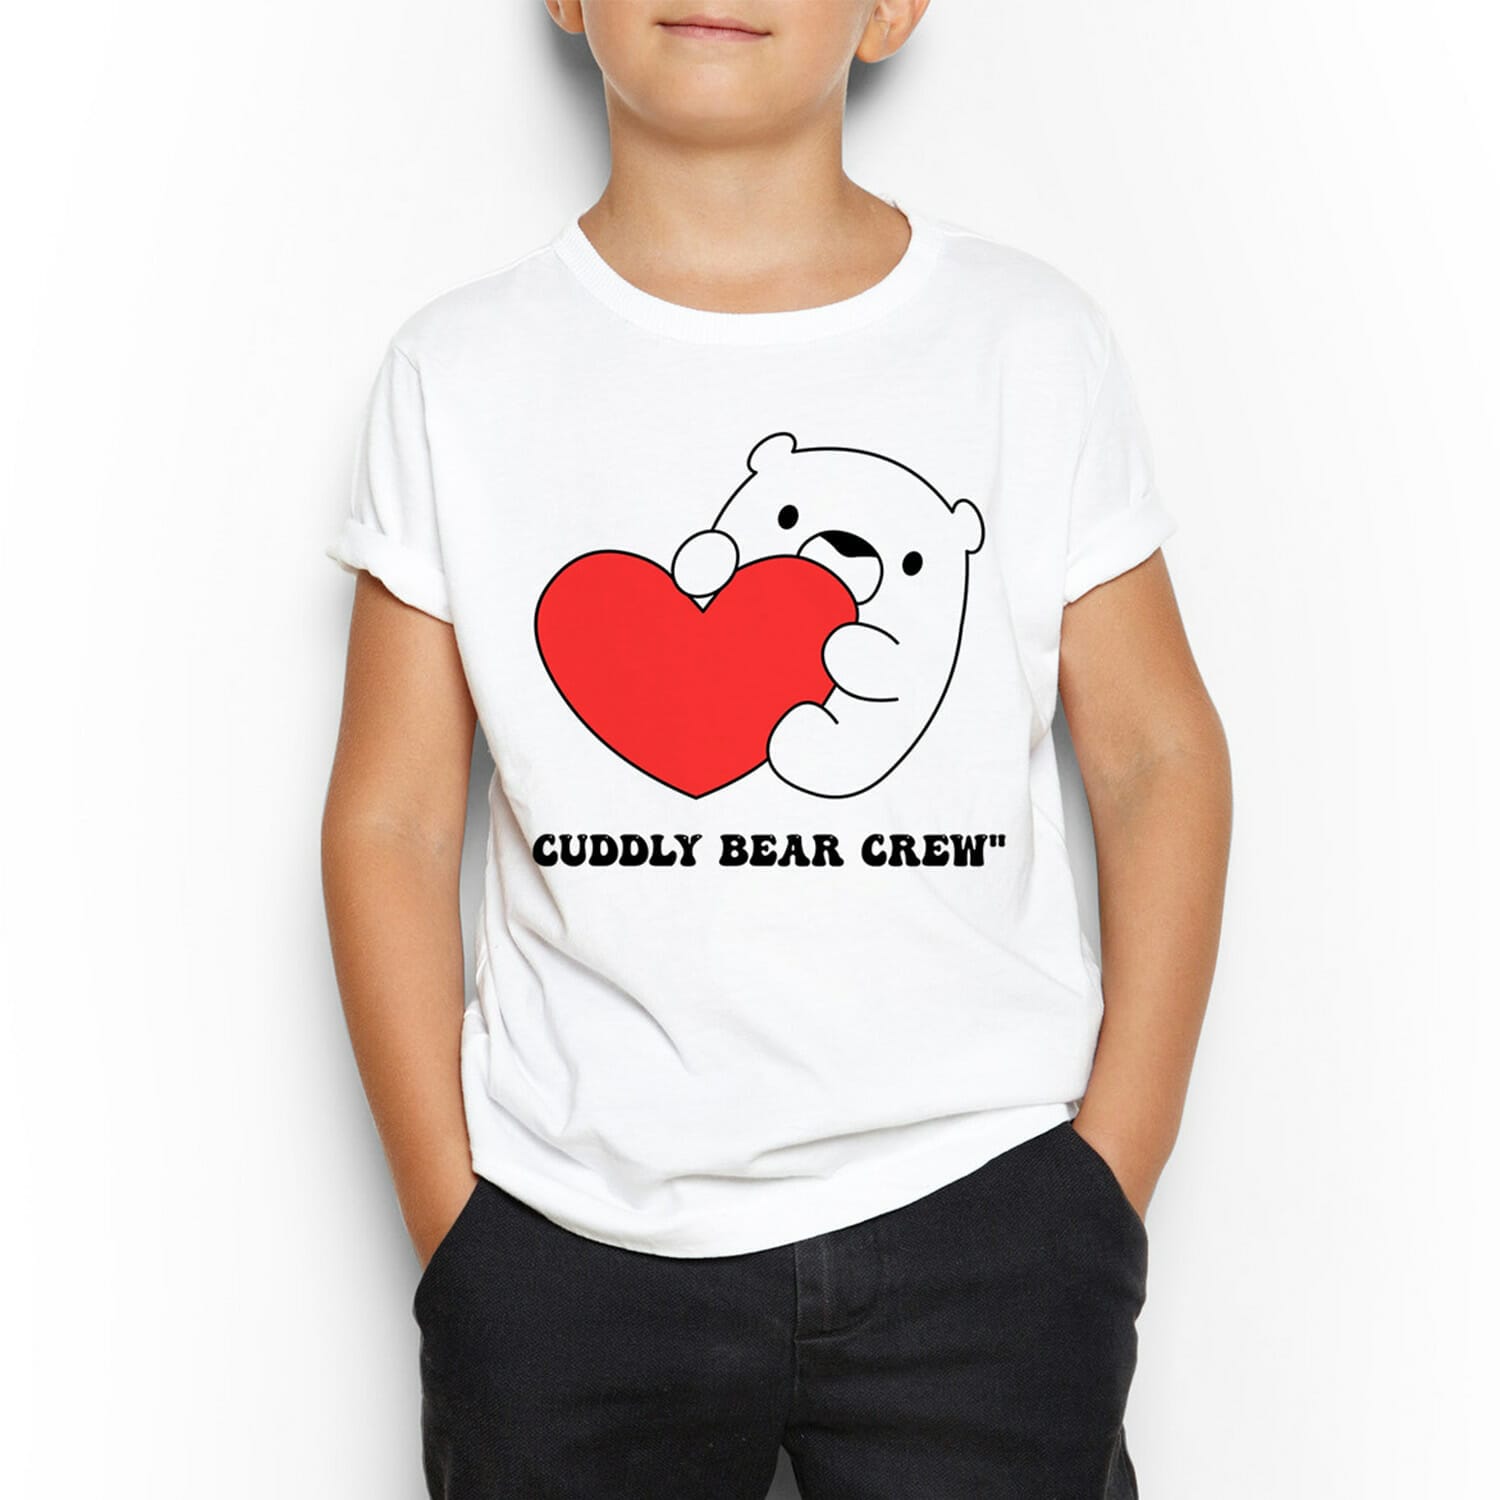 Cuddly Bear Crew Tshirt Design For Kids